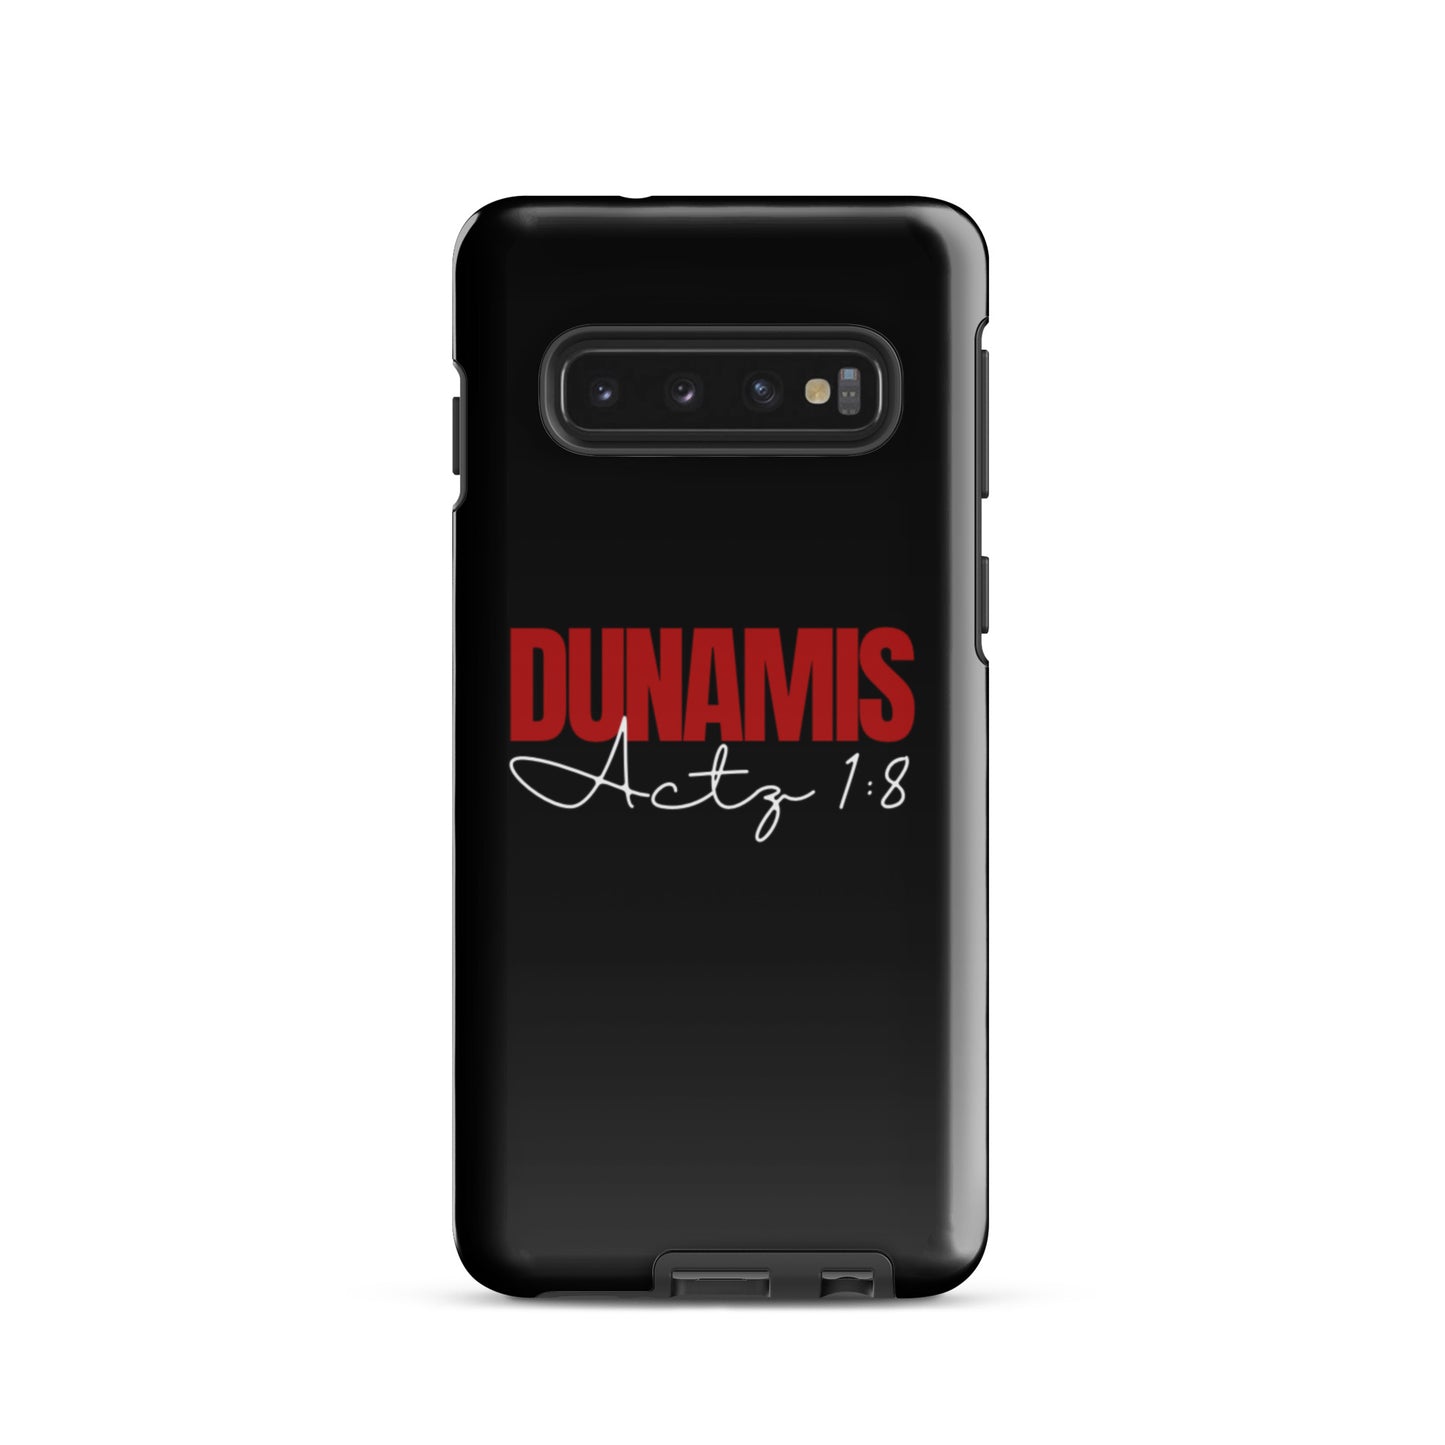 Dunamis Actz Tough case for Samsung®